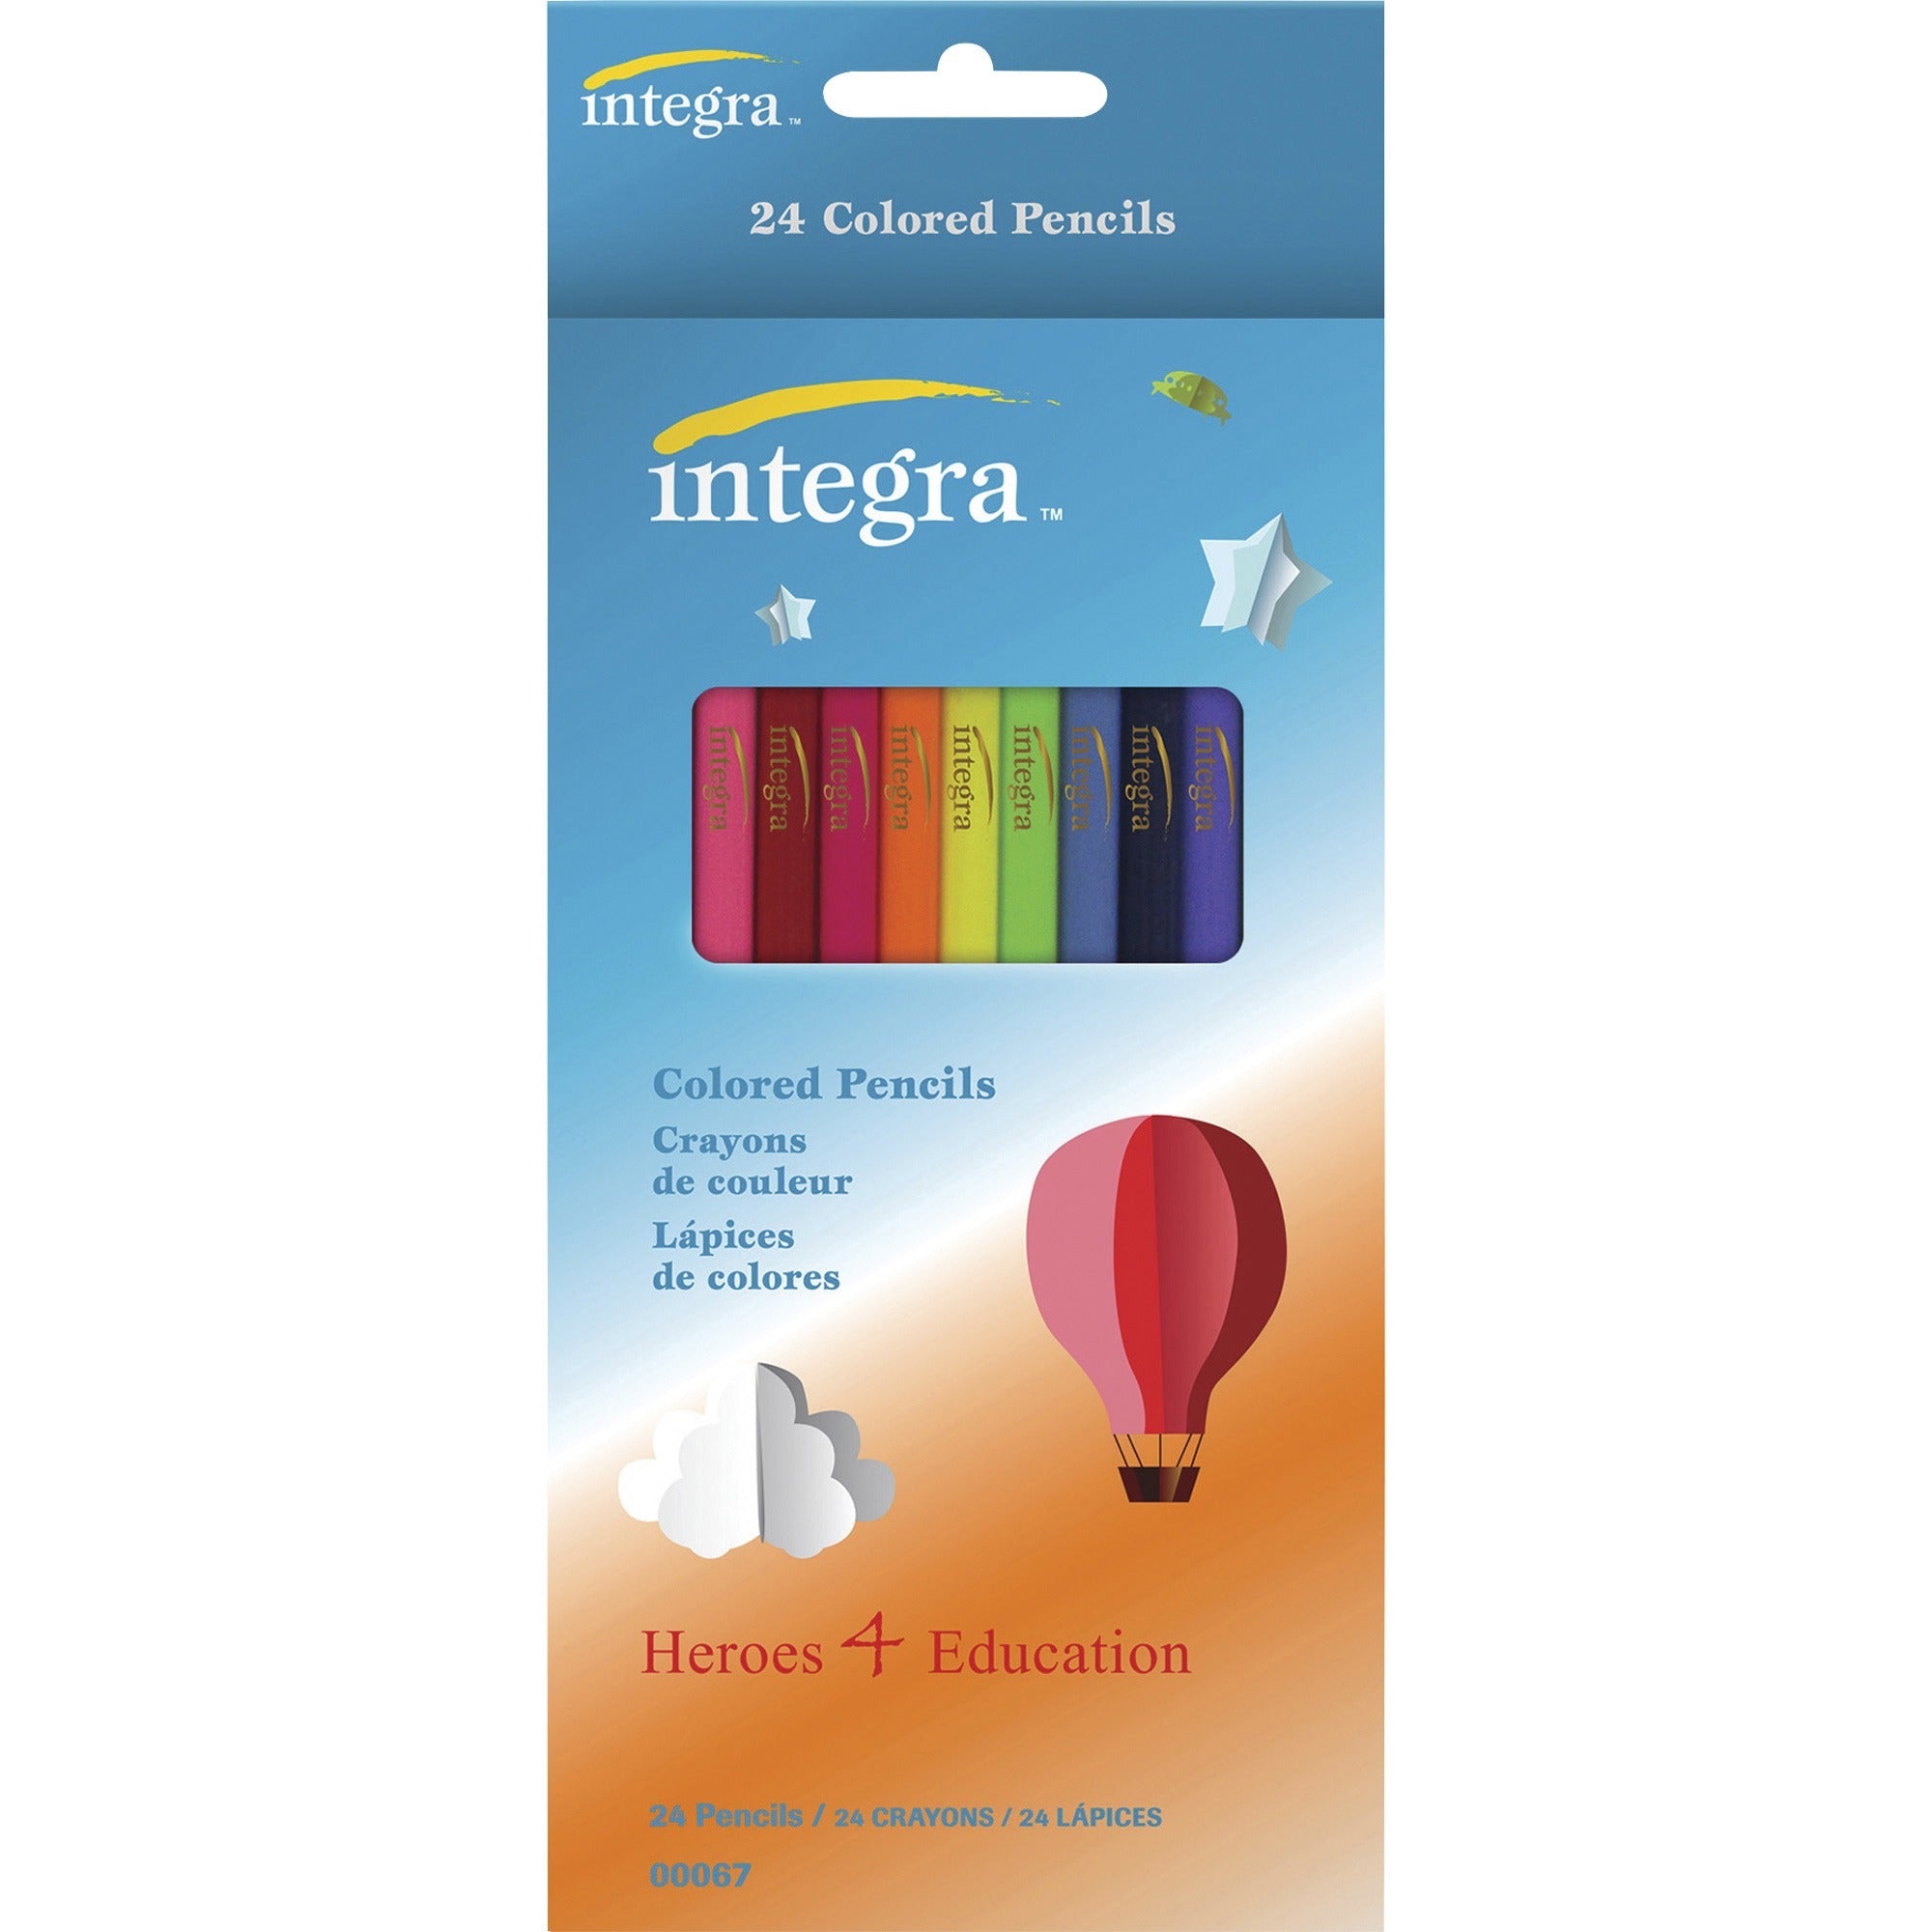 integra-colored-pencil-24-pack_ita00067 - 1